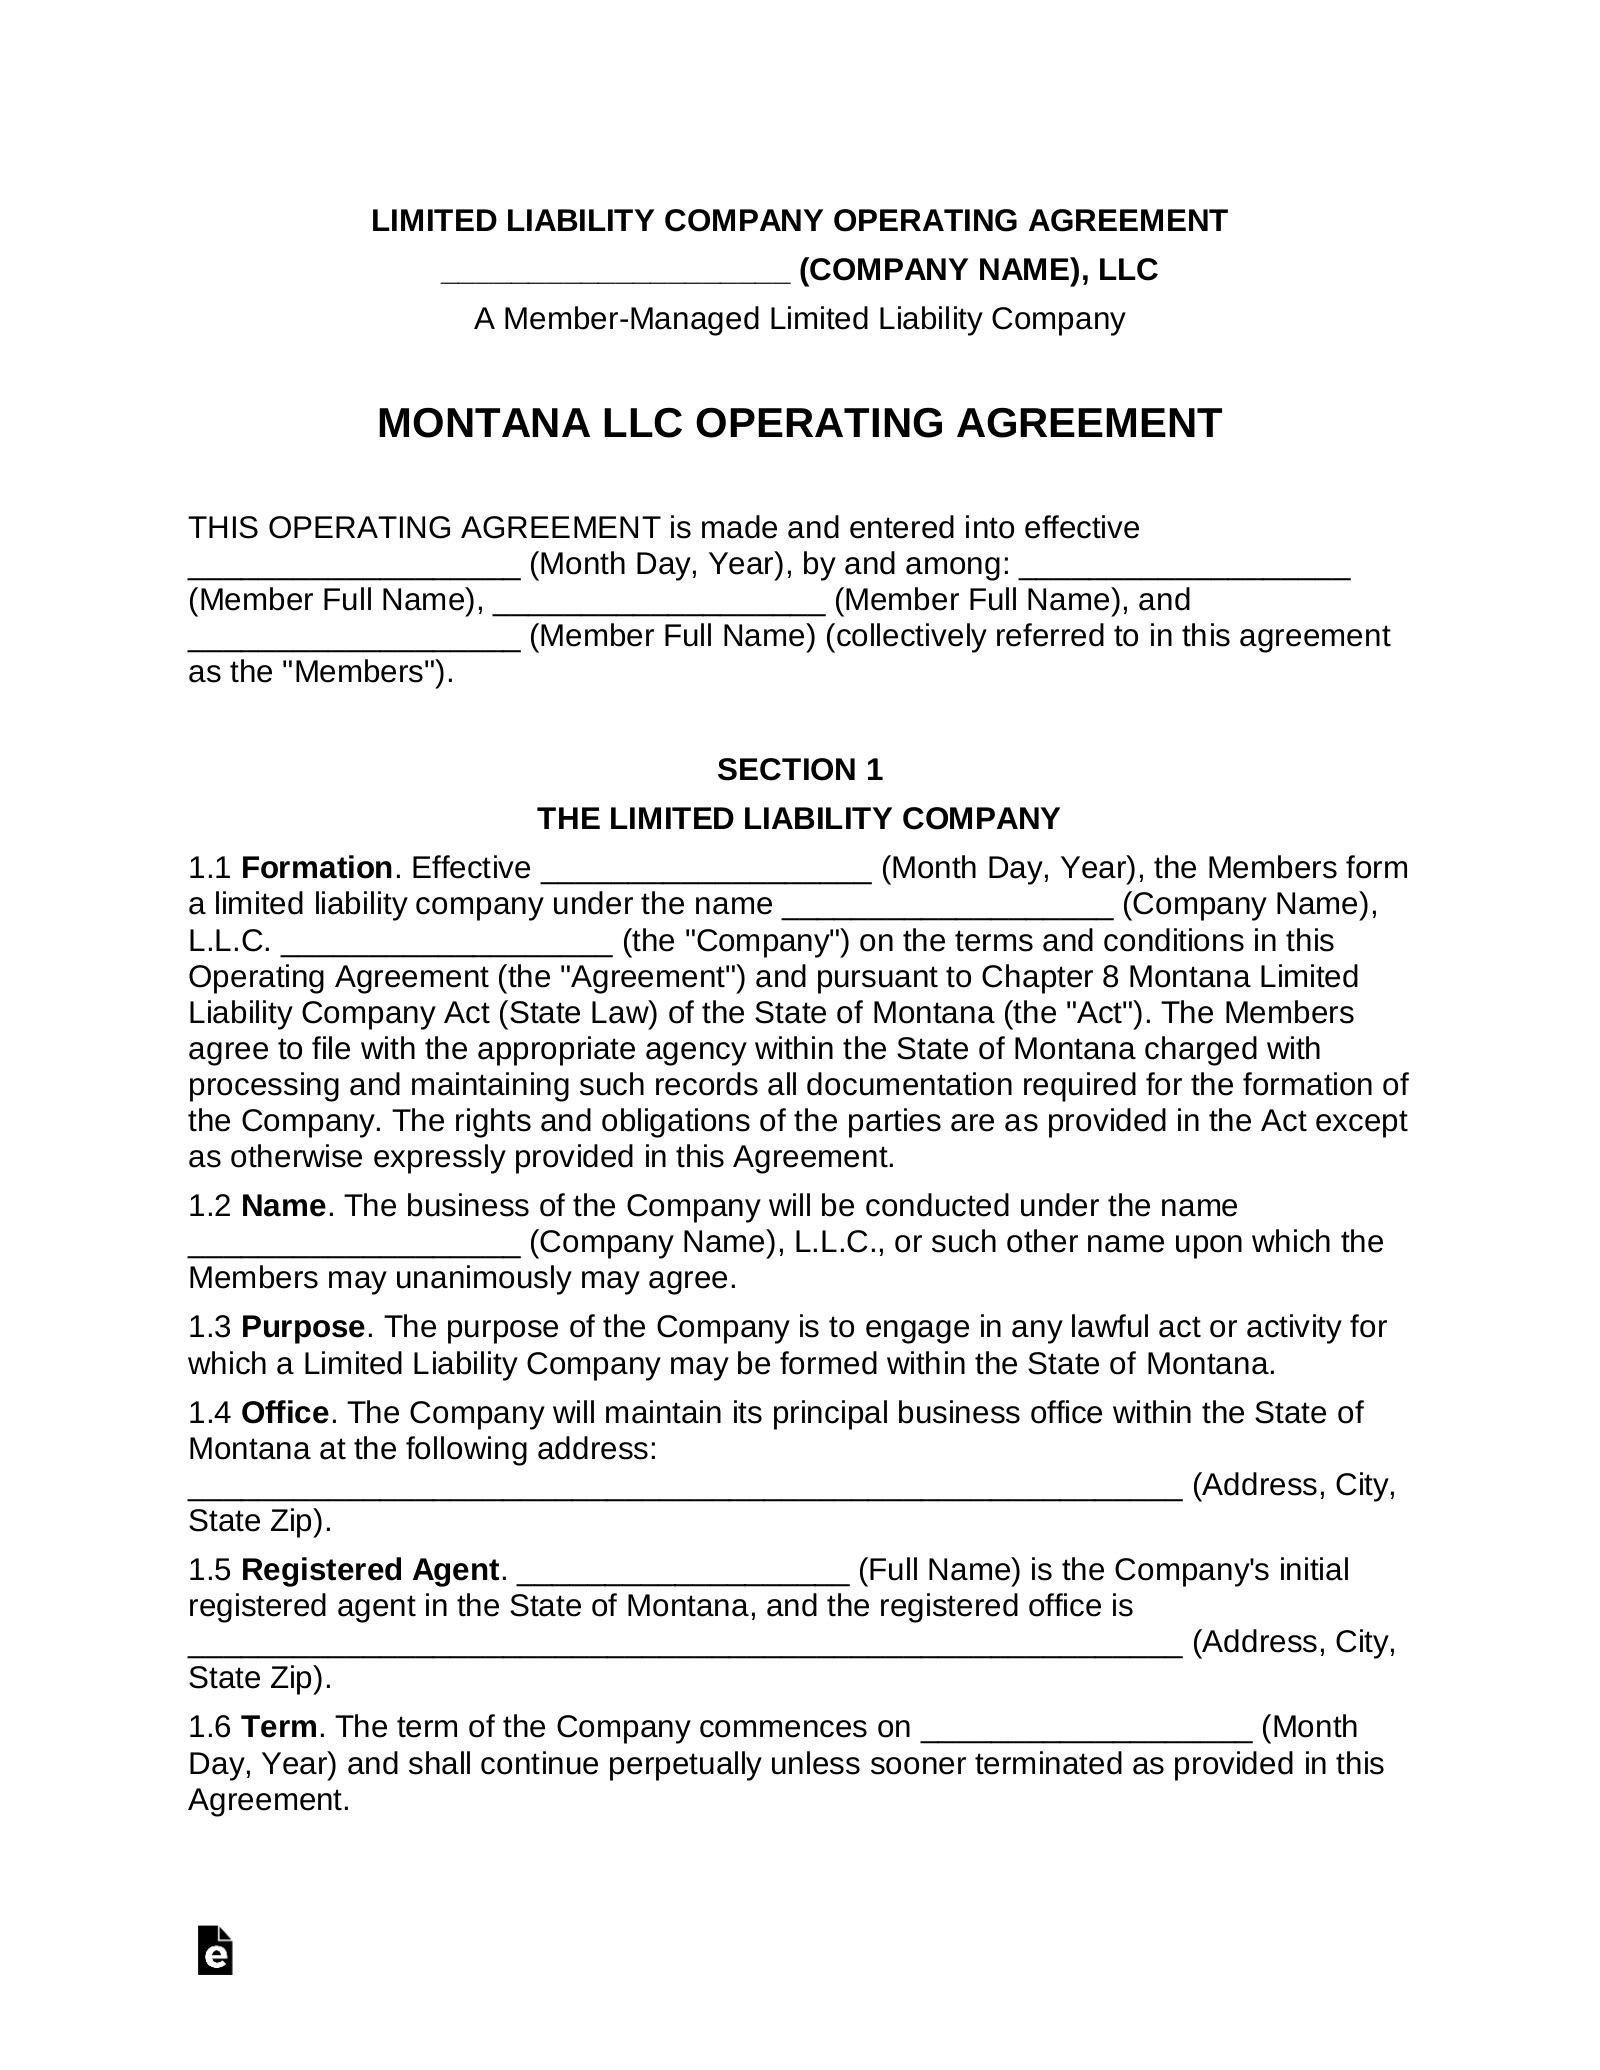 Montana Multi-Member LLC Operating Agreement Form